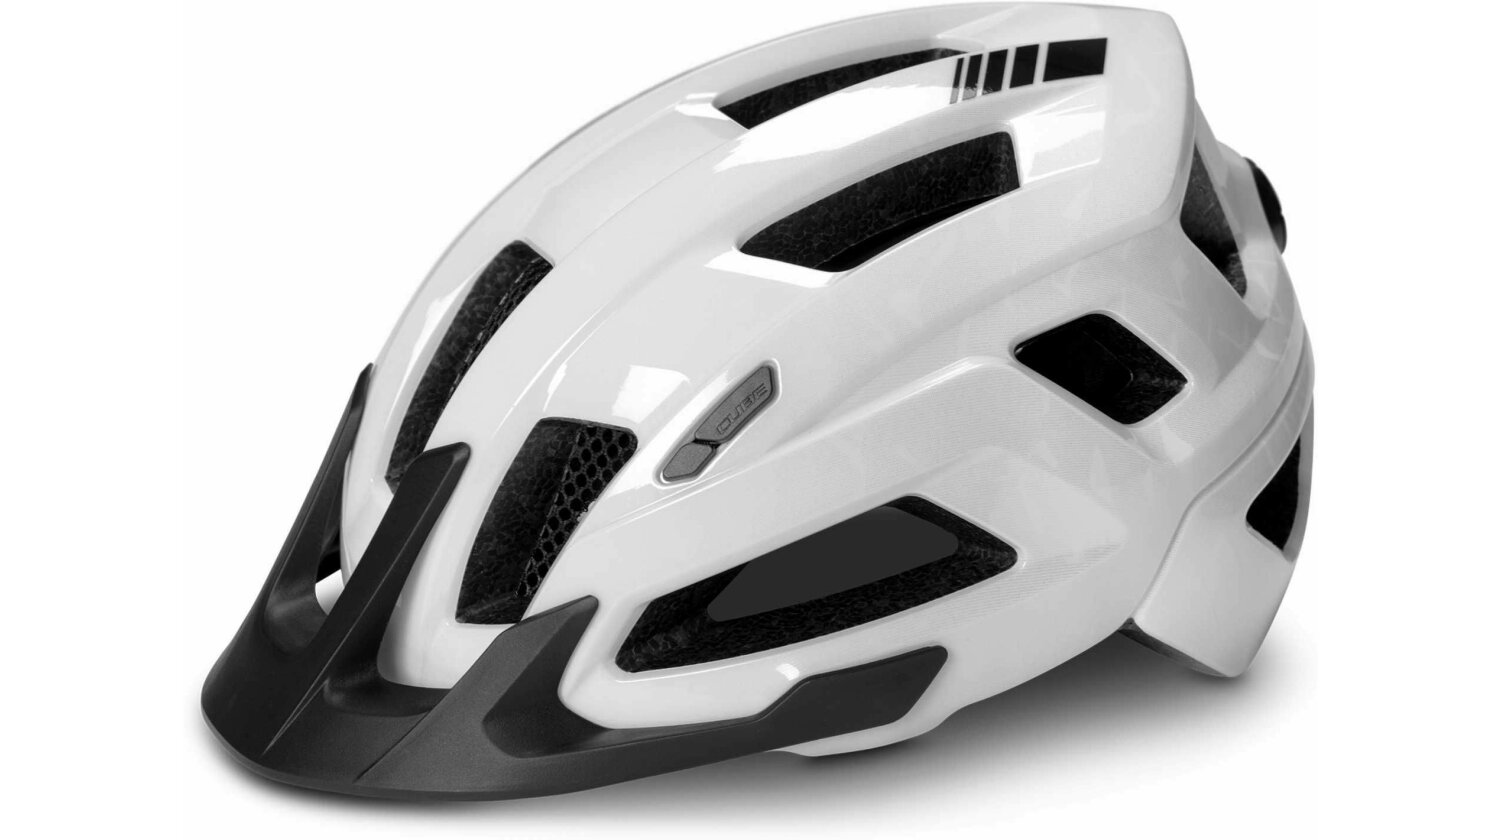 Cube Helm STEEP glossy white